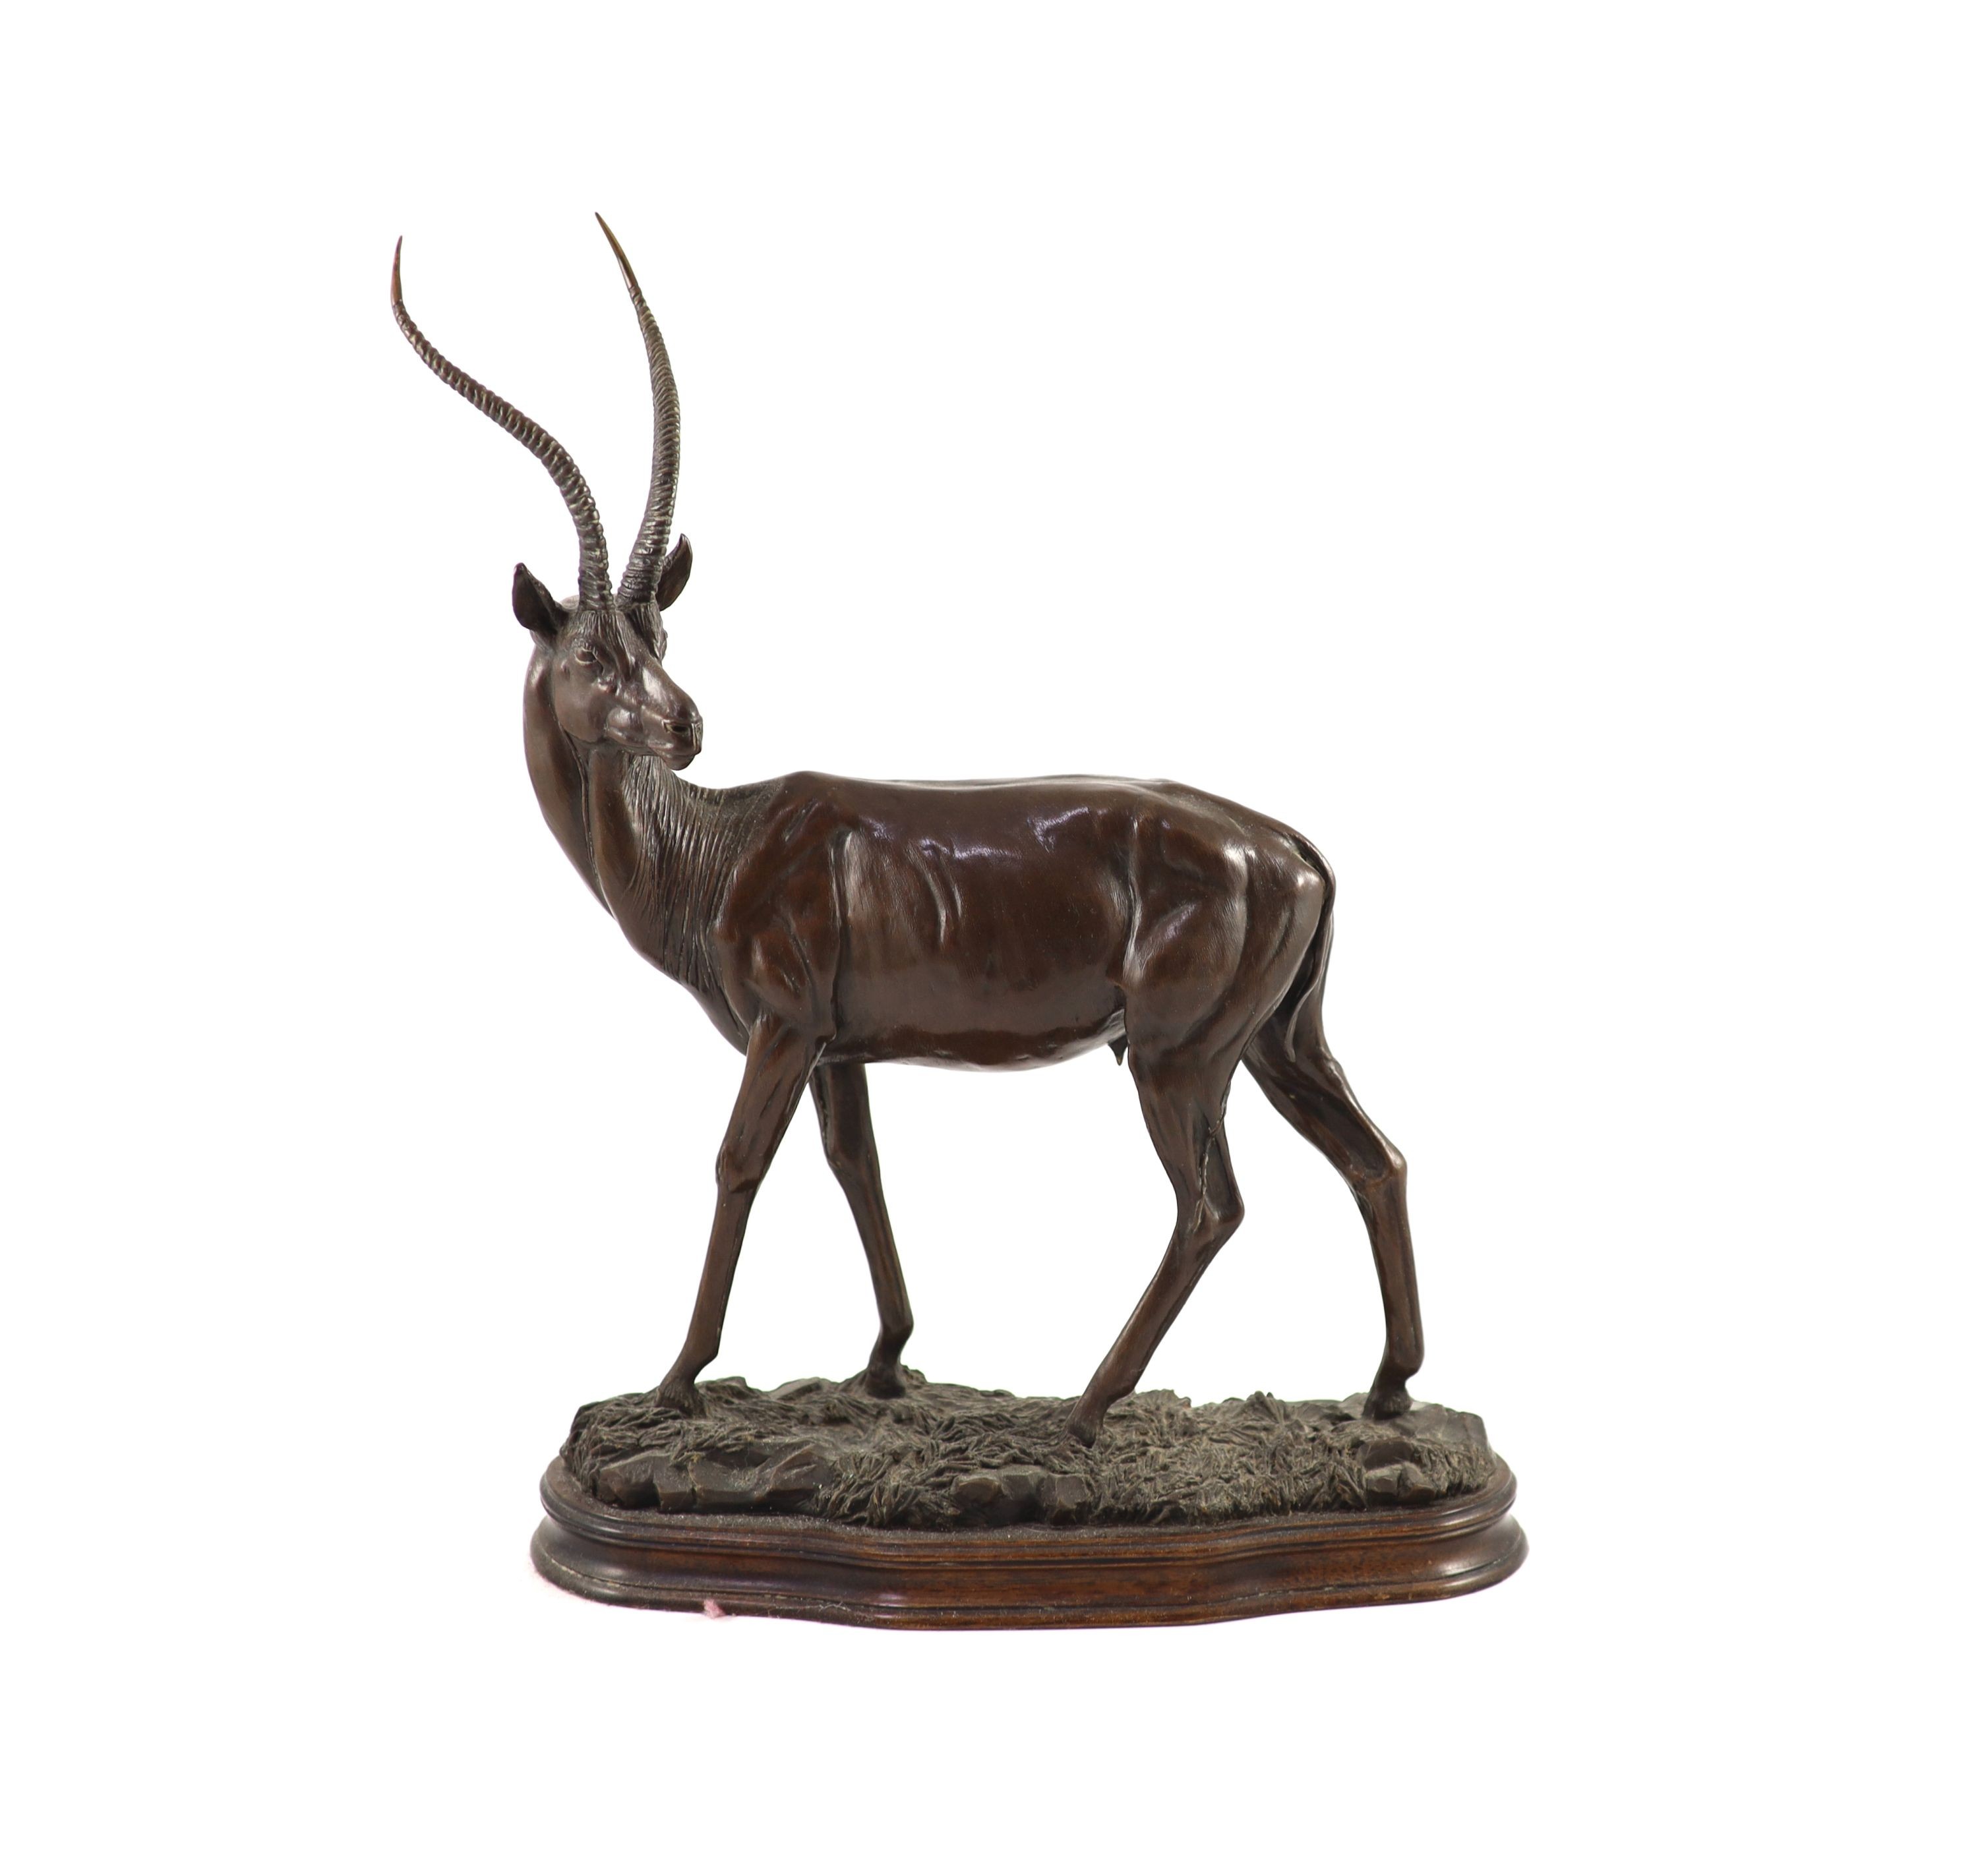 Tim Nicklin. A bronze model of a Grants gazelle length 33cm height 41cm